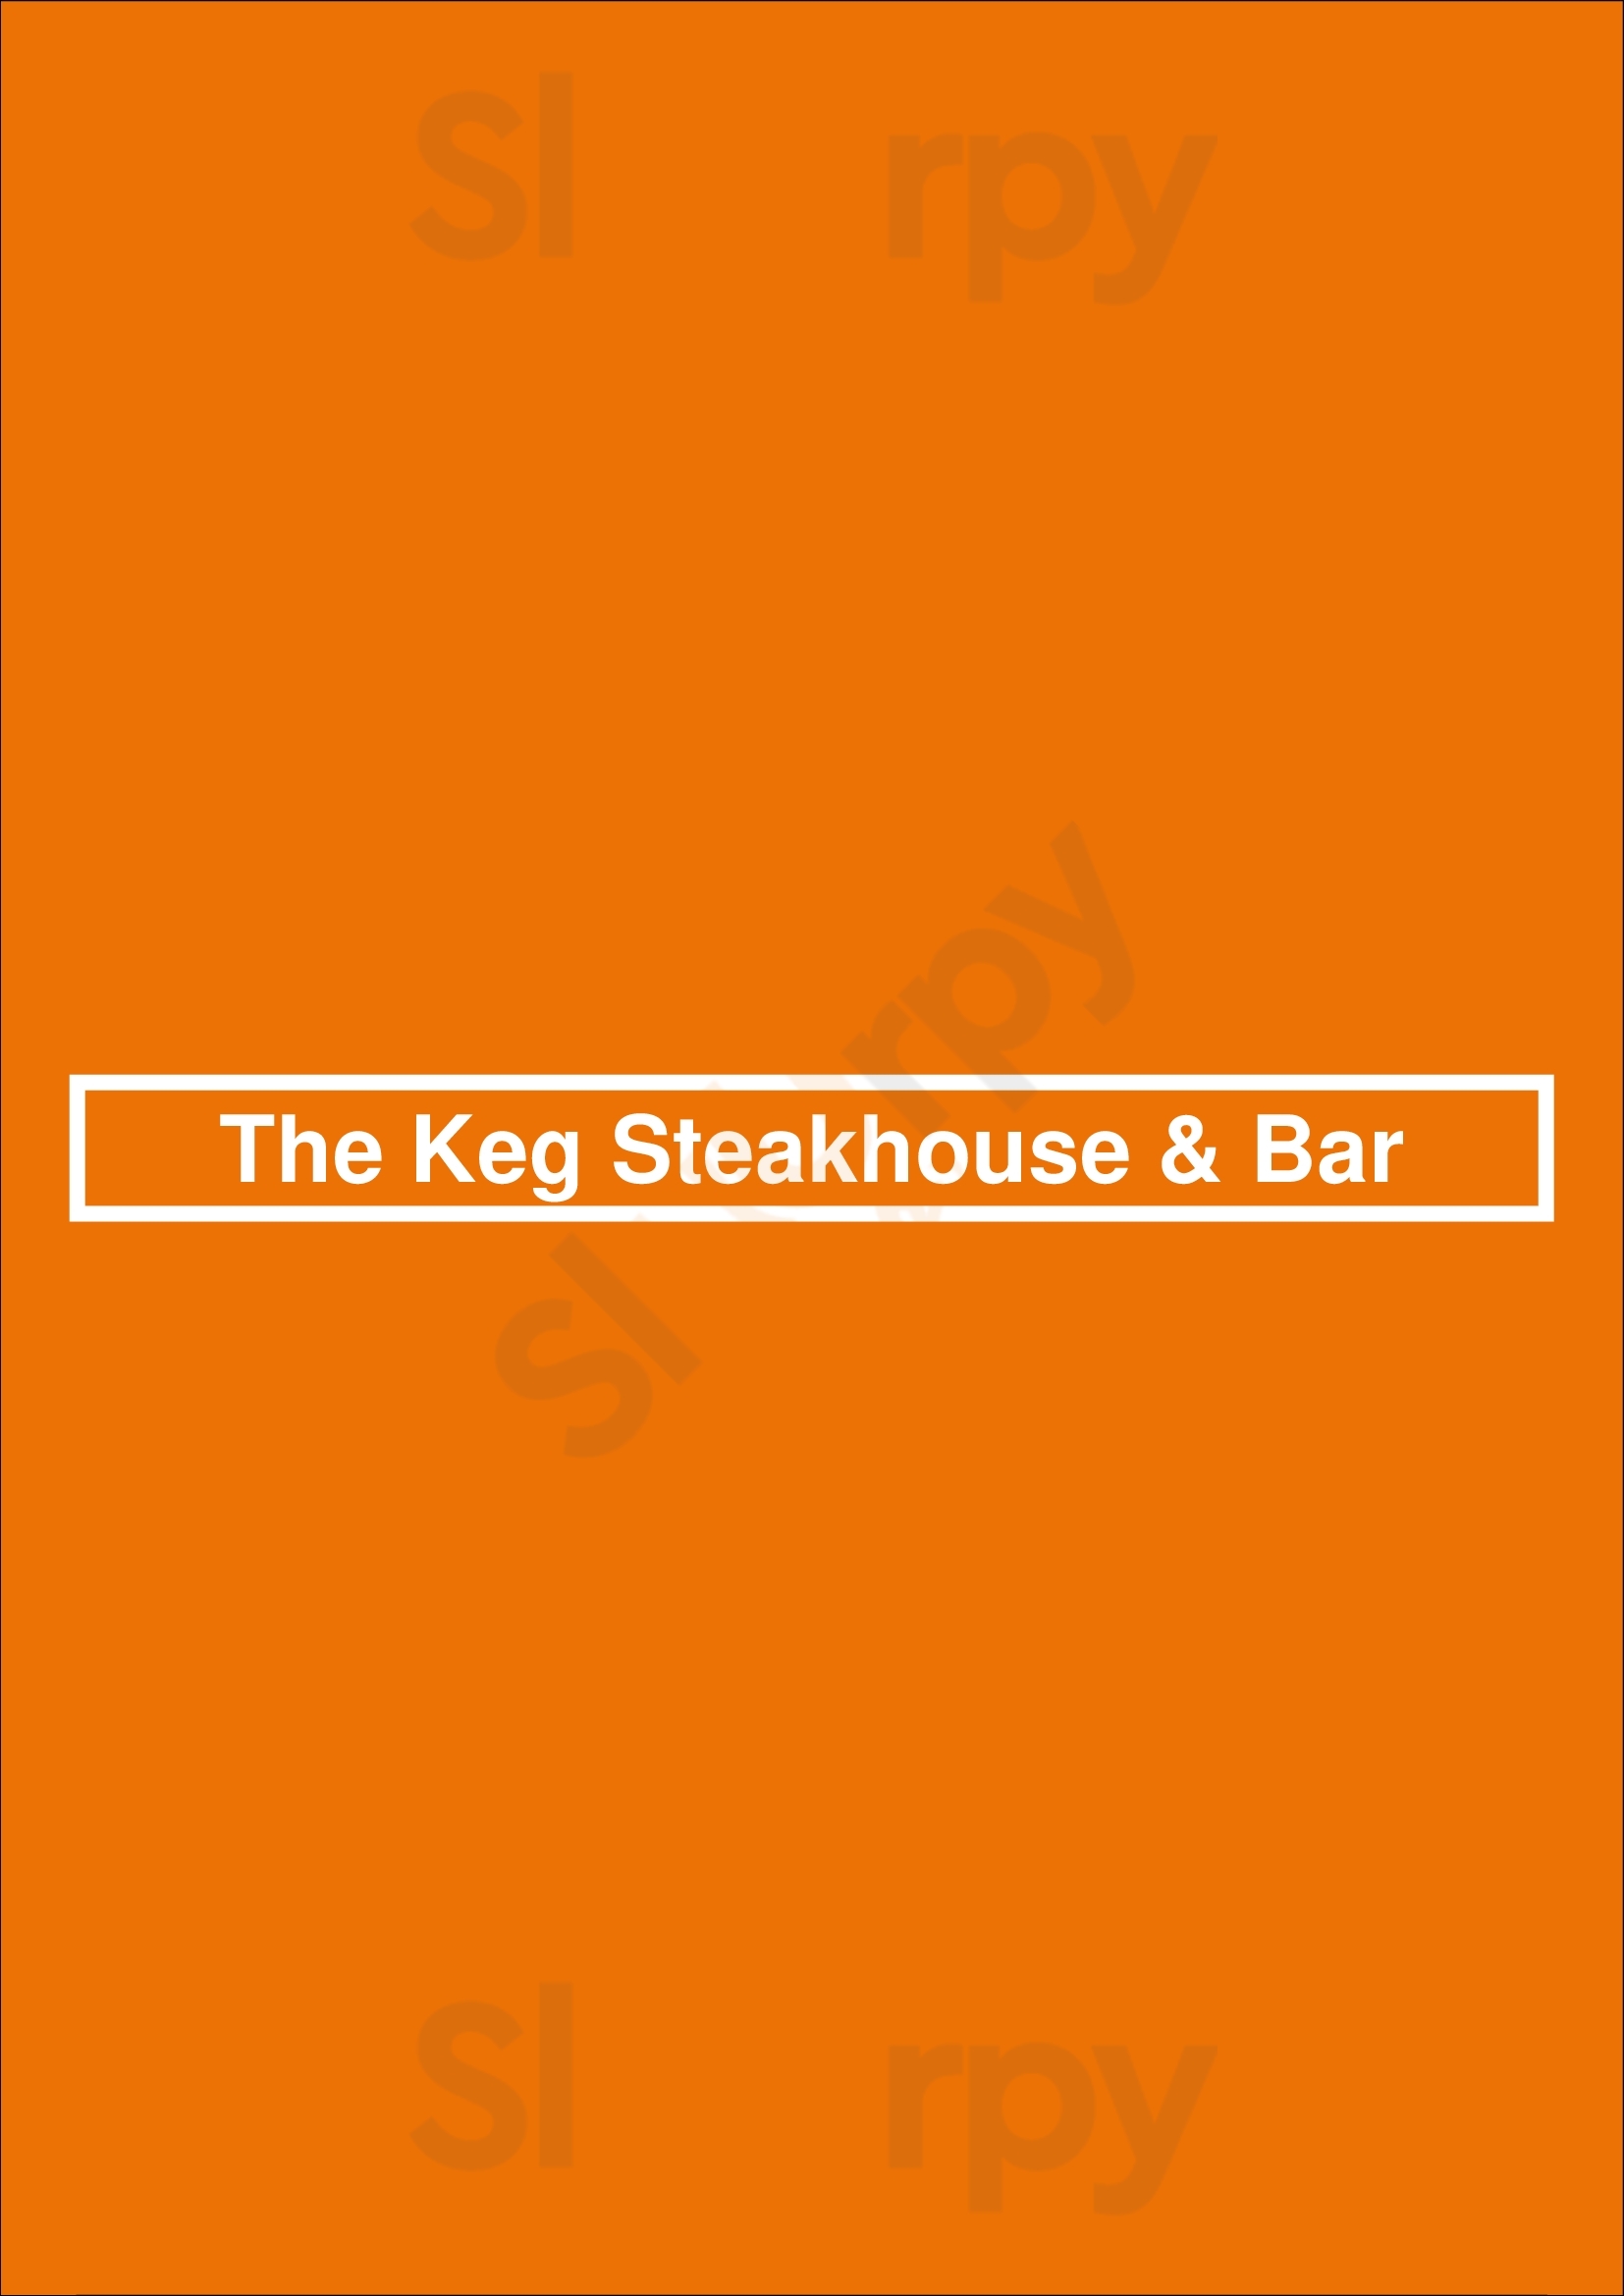 The Keg Steakhouse + Bar - Dixon Road Toronto Menu - 1